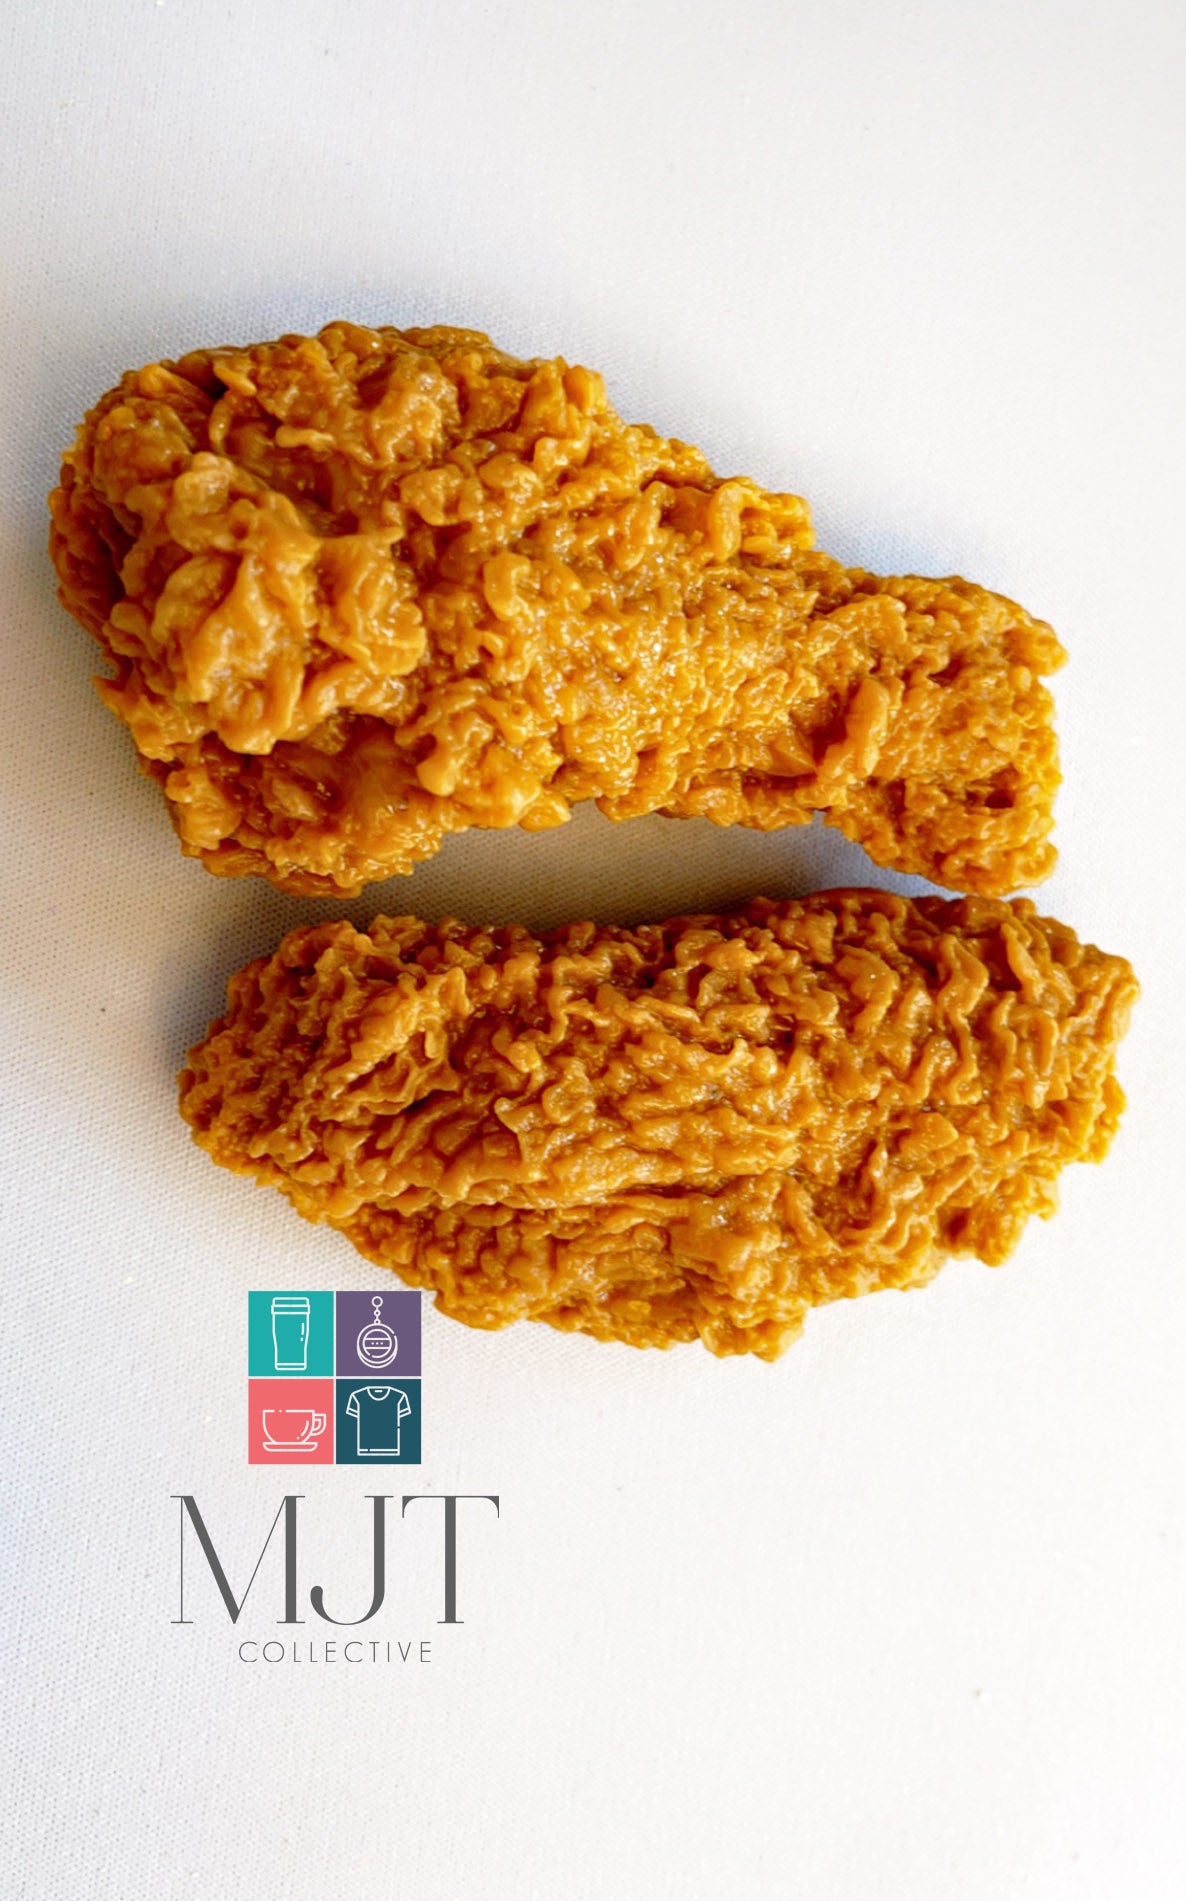 Fried Chicken Wing/Drummy -  2 pieces